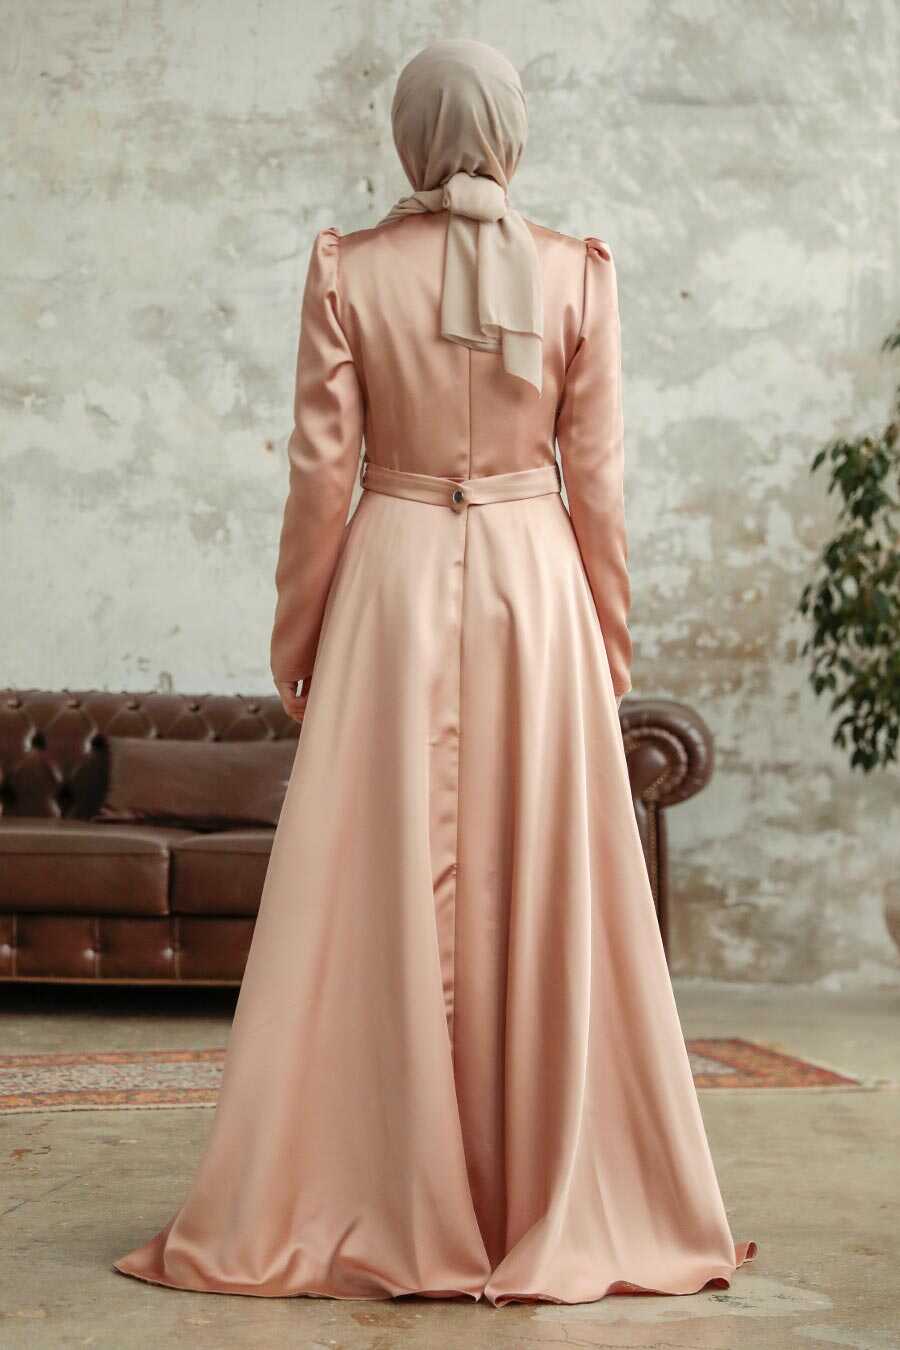 Neva Style - Satin Biscuit Islamic Wedding Dress 3967BS